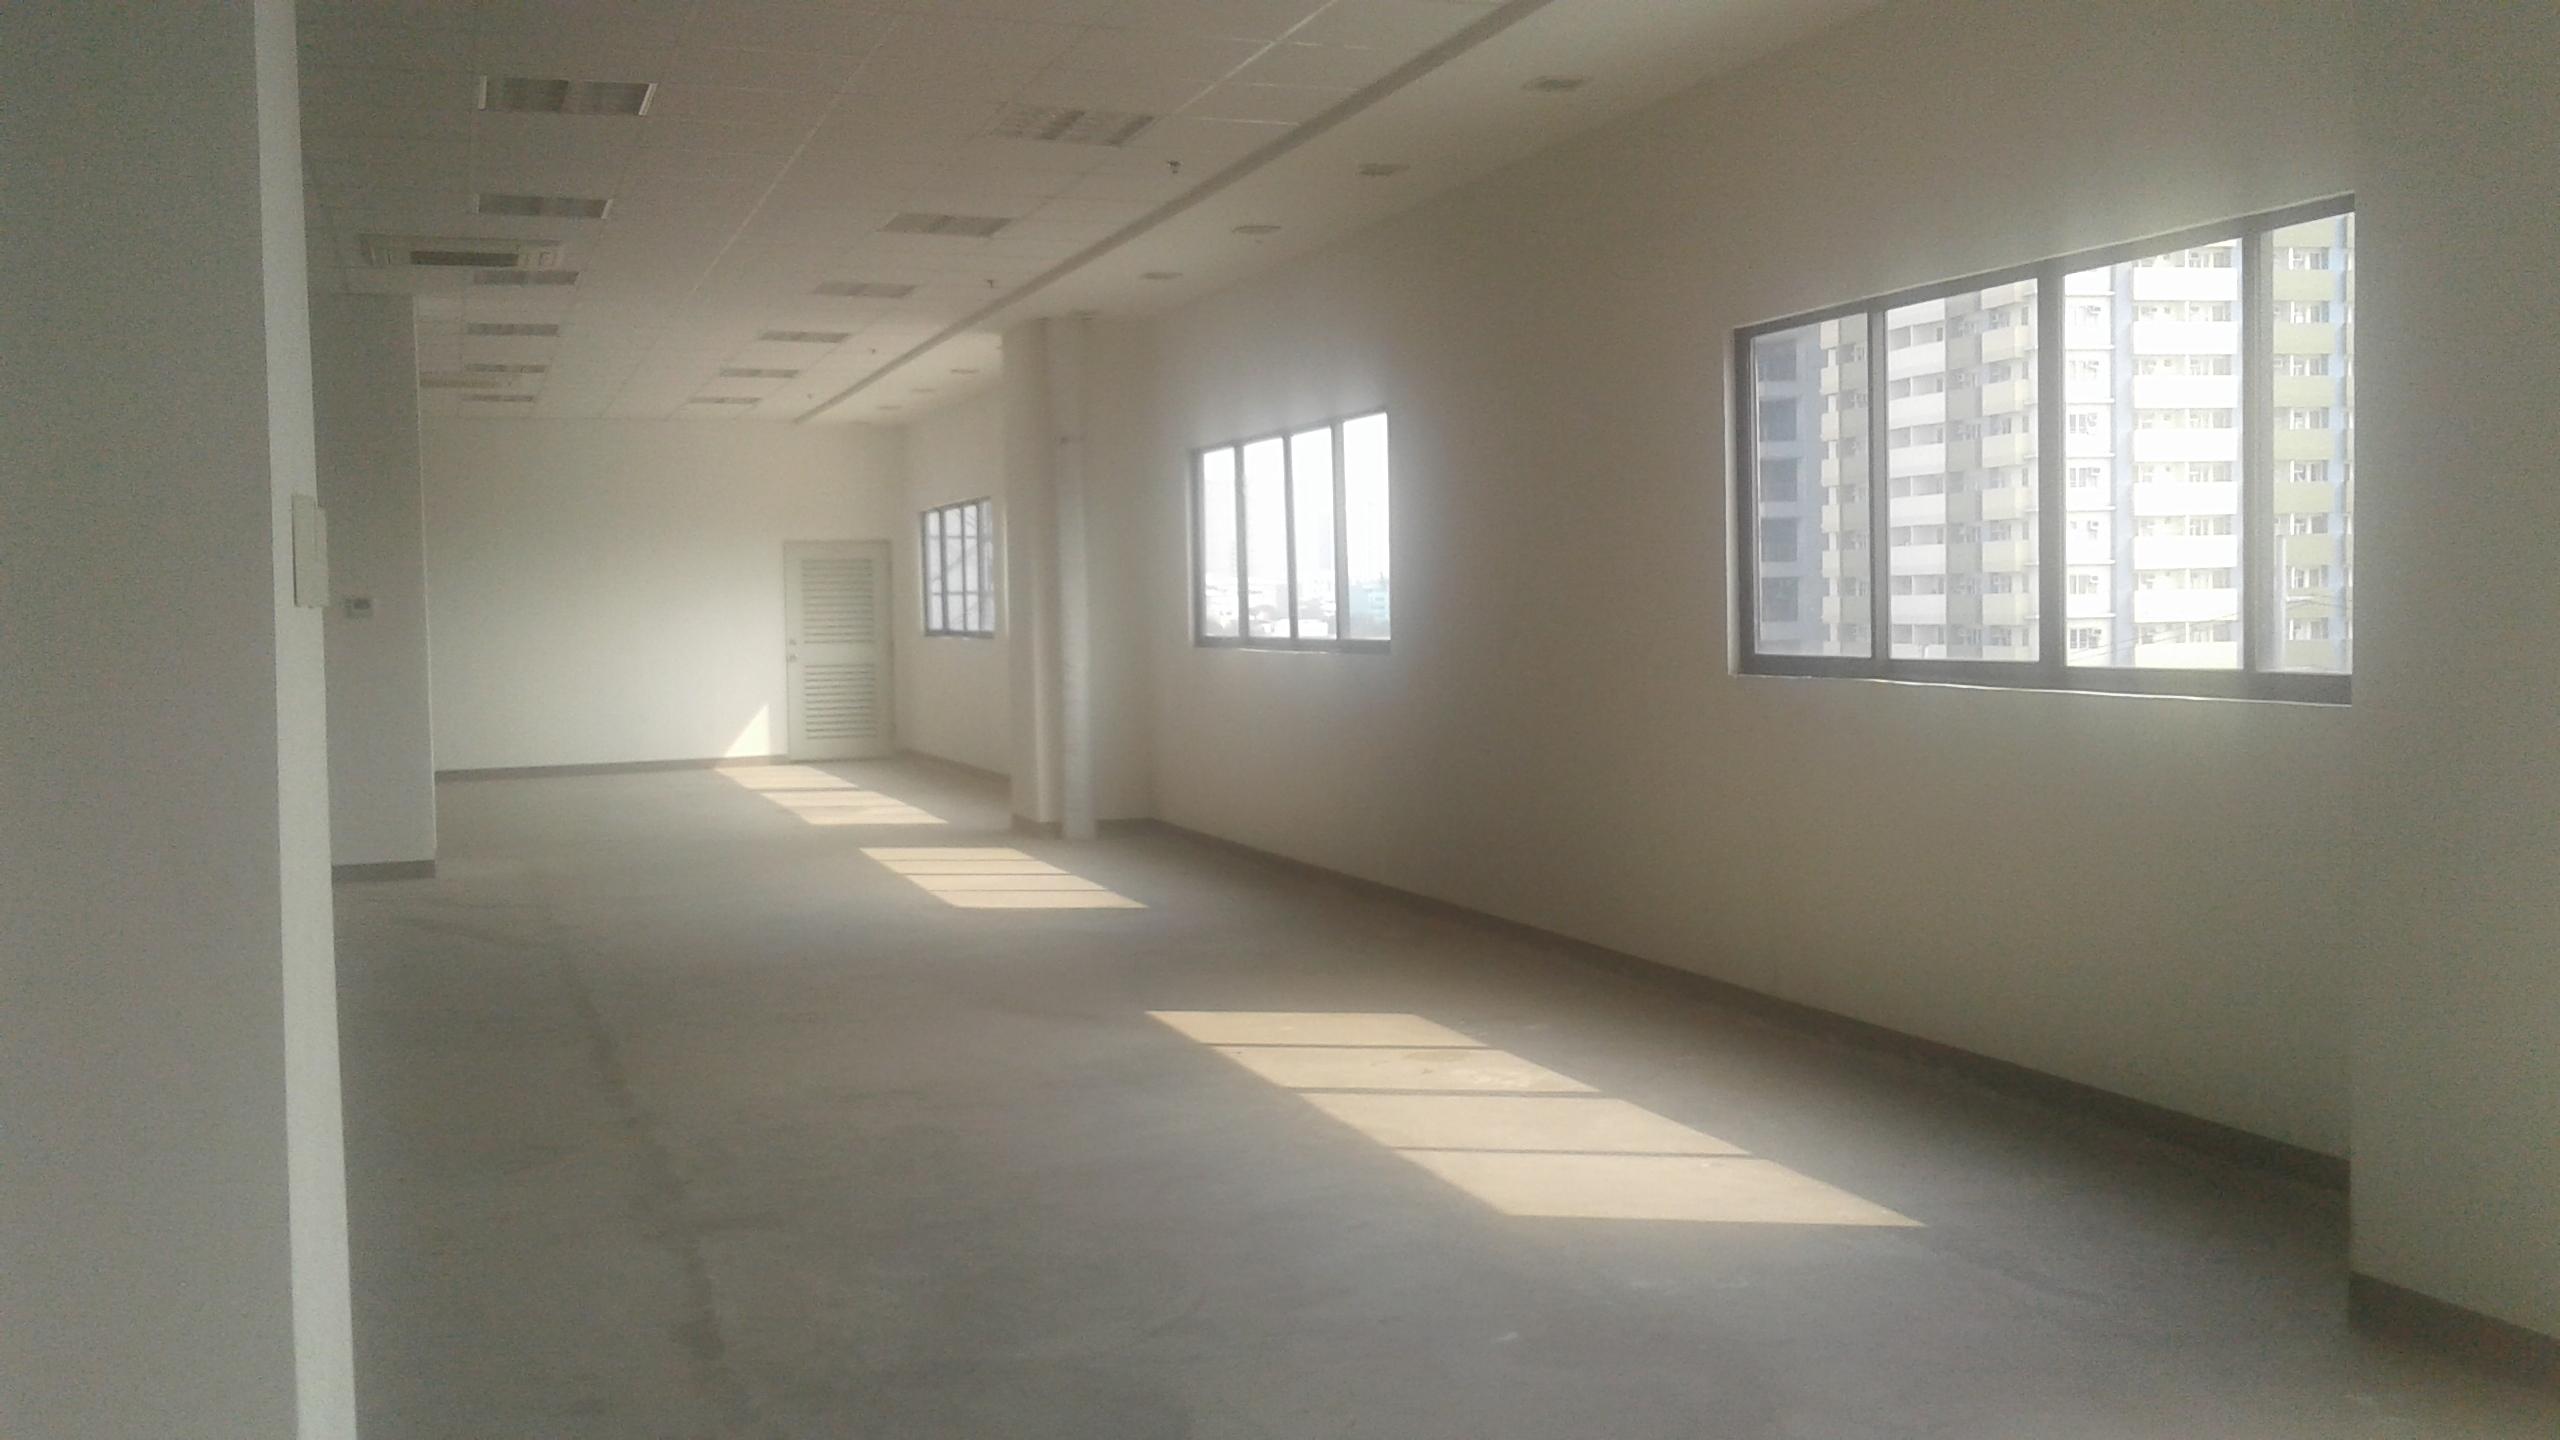 PEZA Office Space Rent Lease 1600 sqm Quezon City Philippines